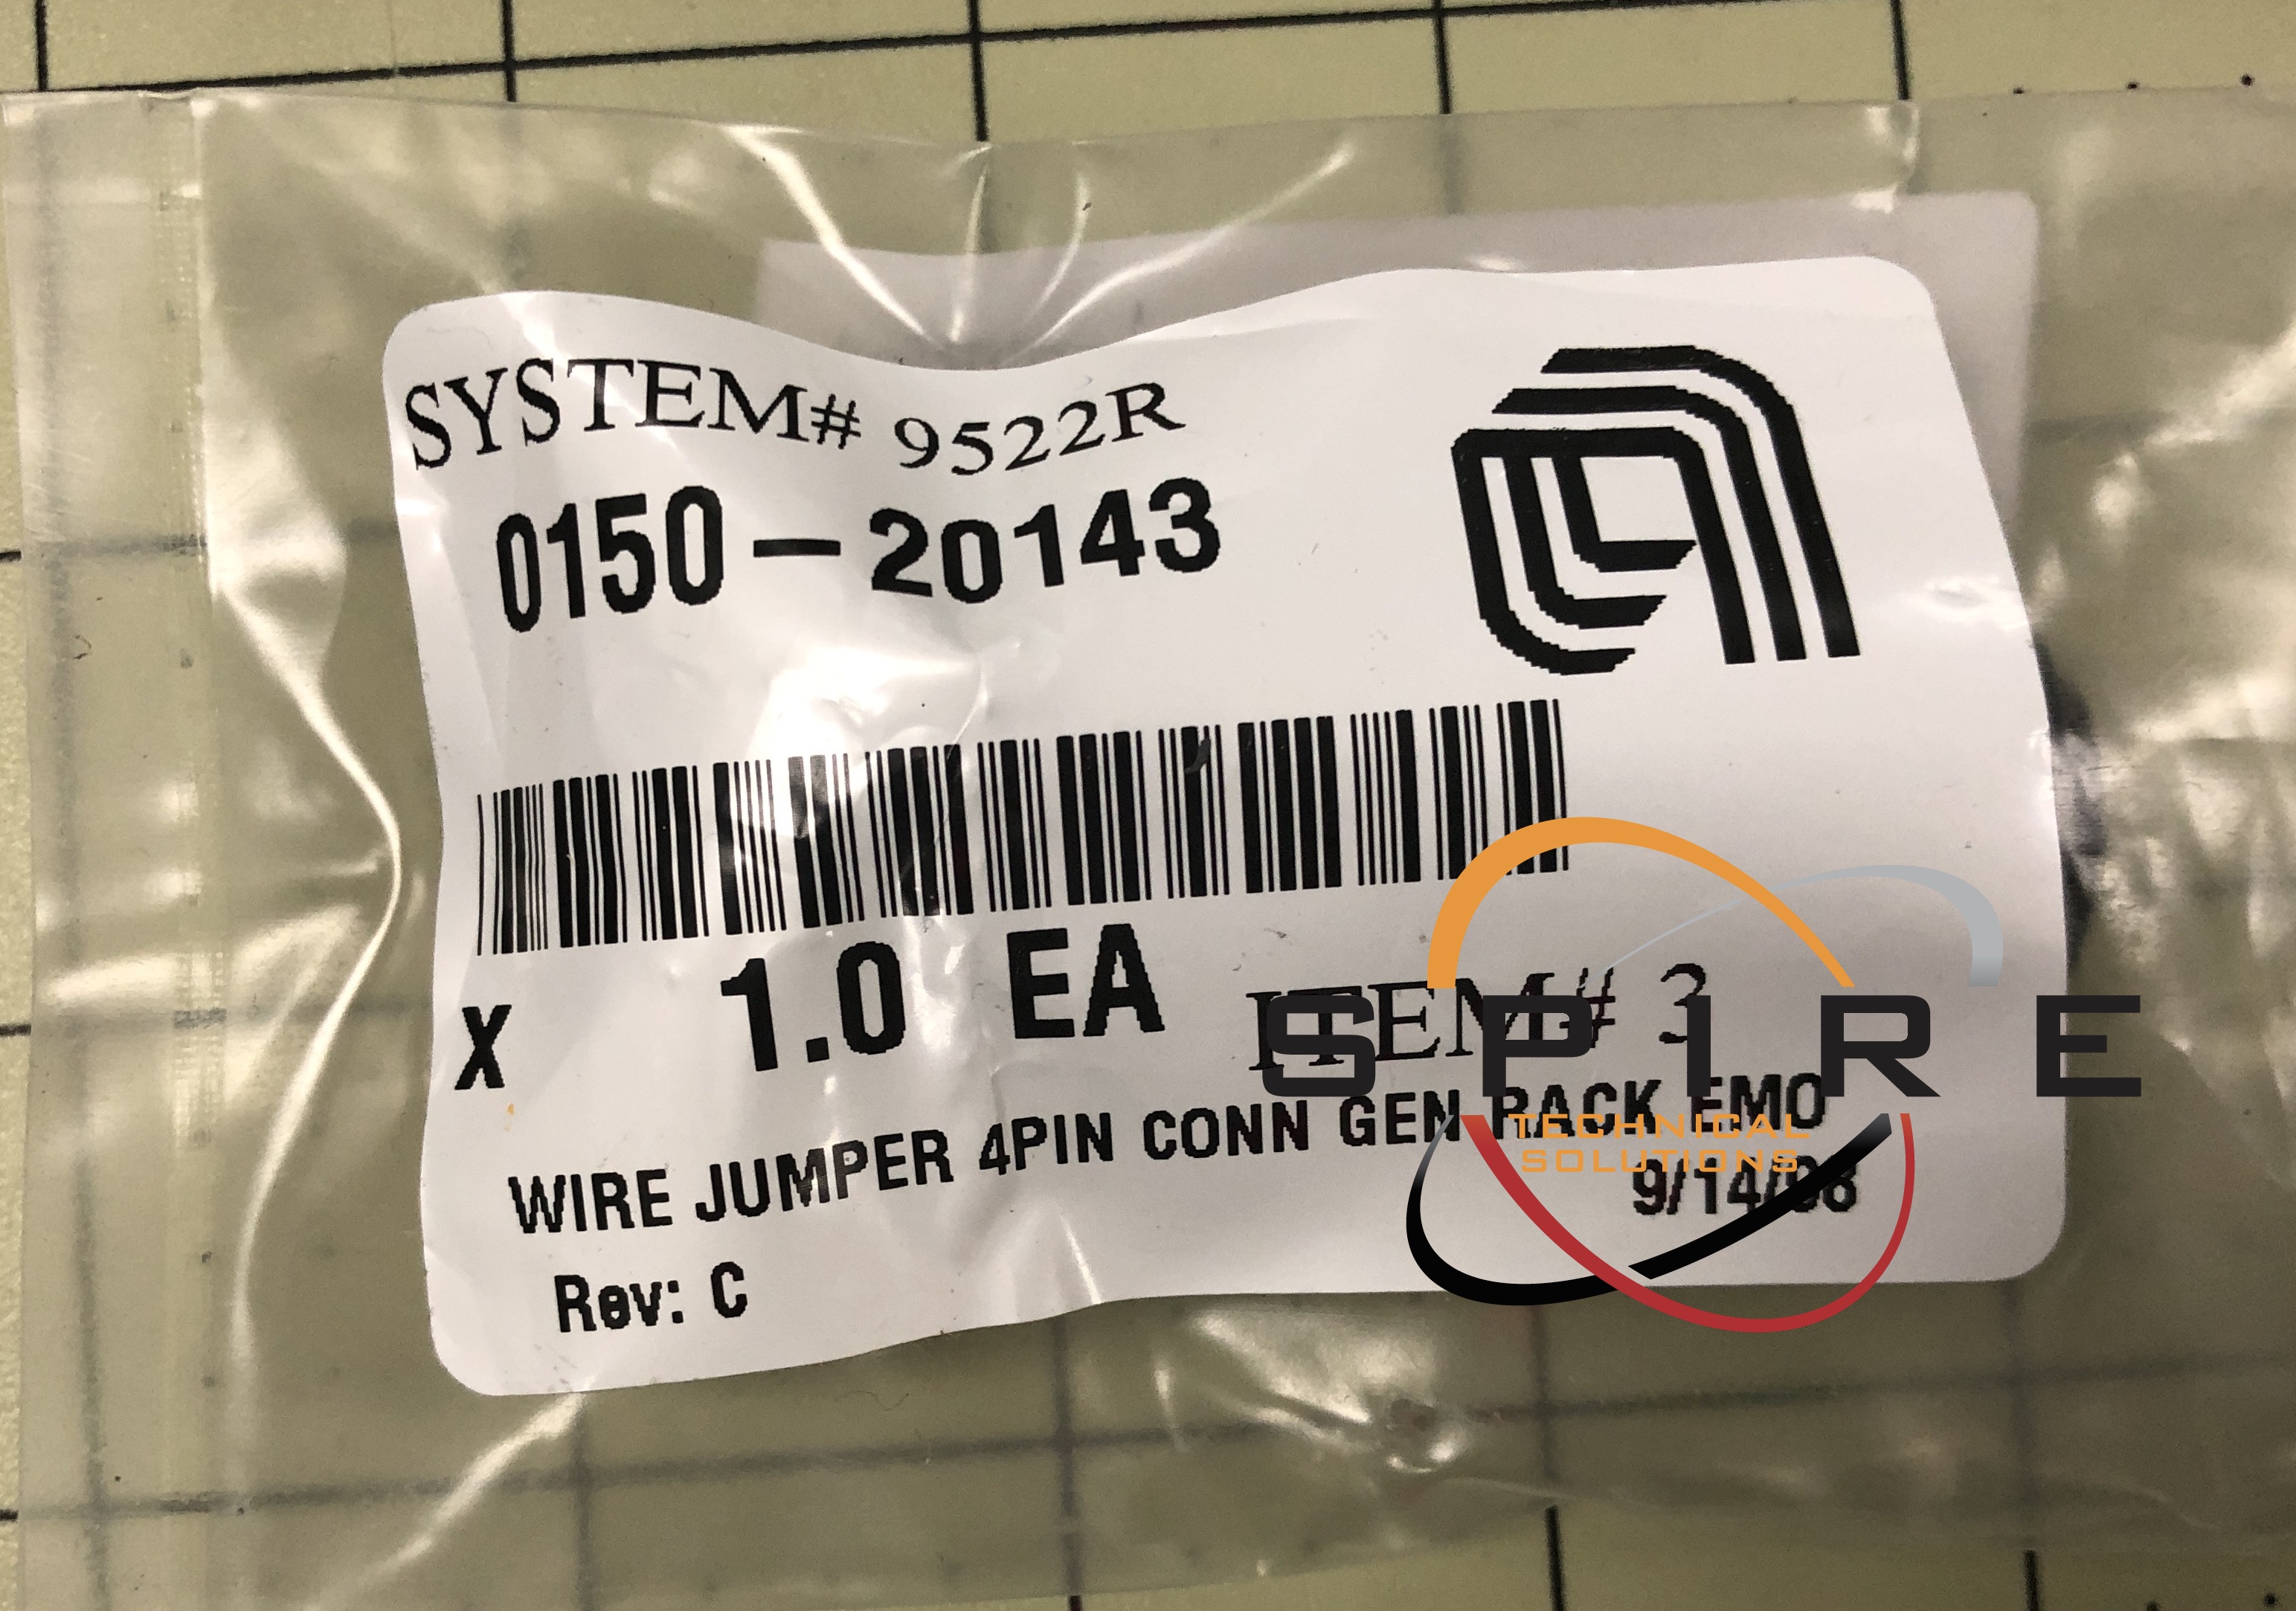 Wire Jumper 4Pin Conn Gen Rack EMO